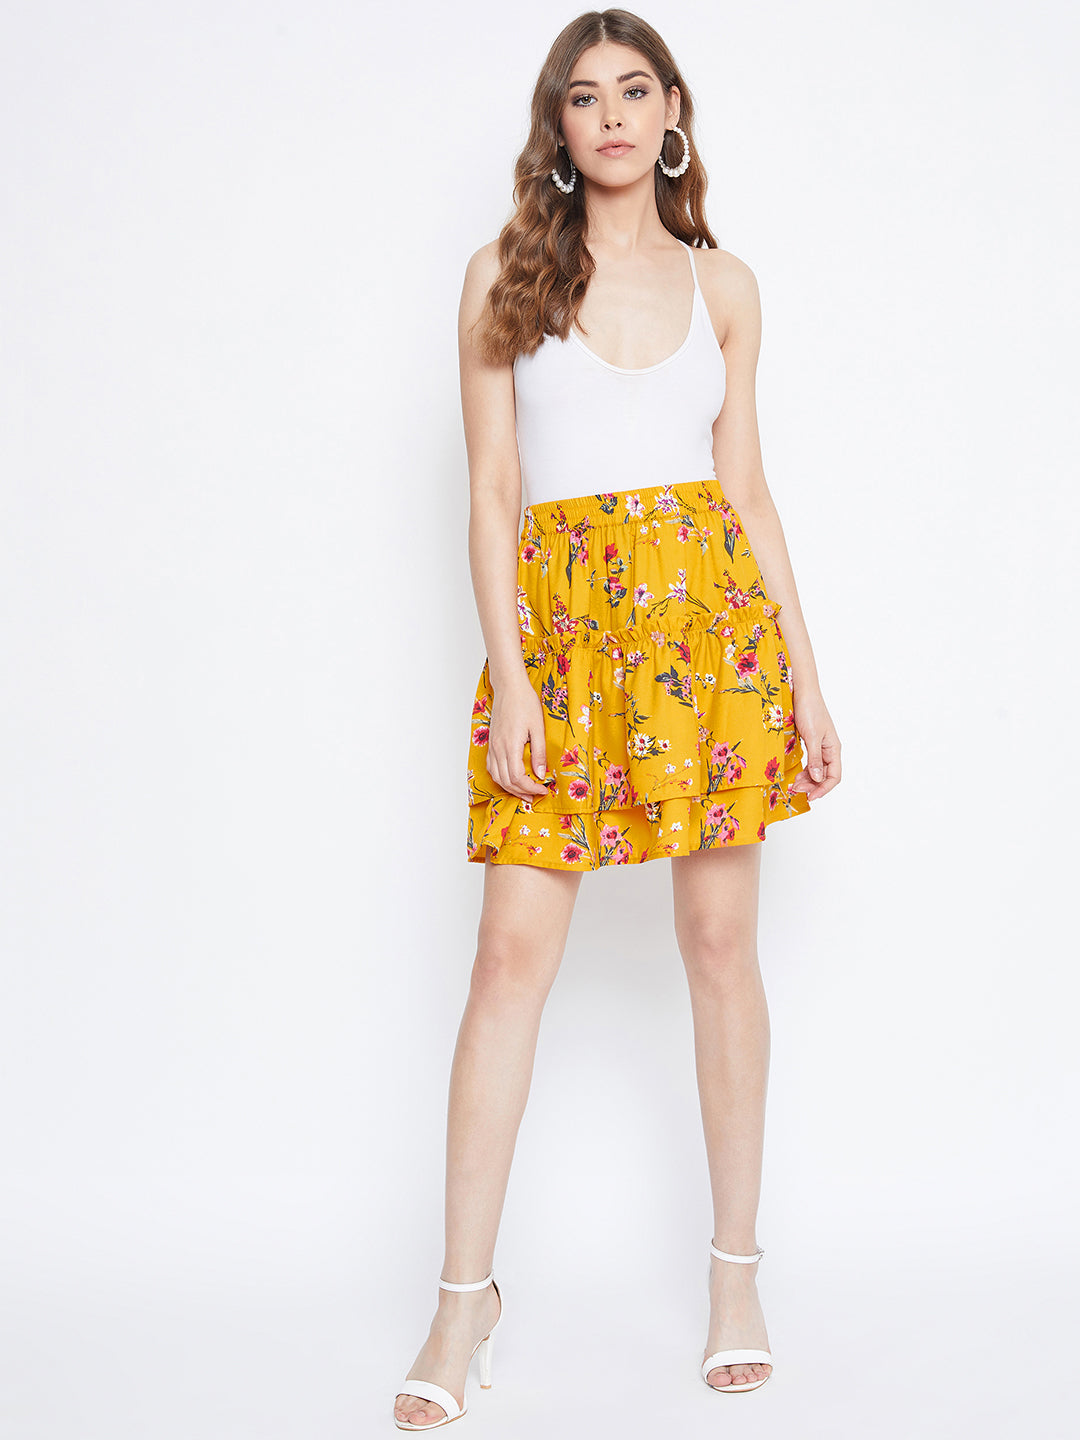 Berrylush Slip-On Mini Women Yellow Floral Skirt Layered Print